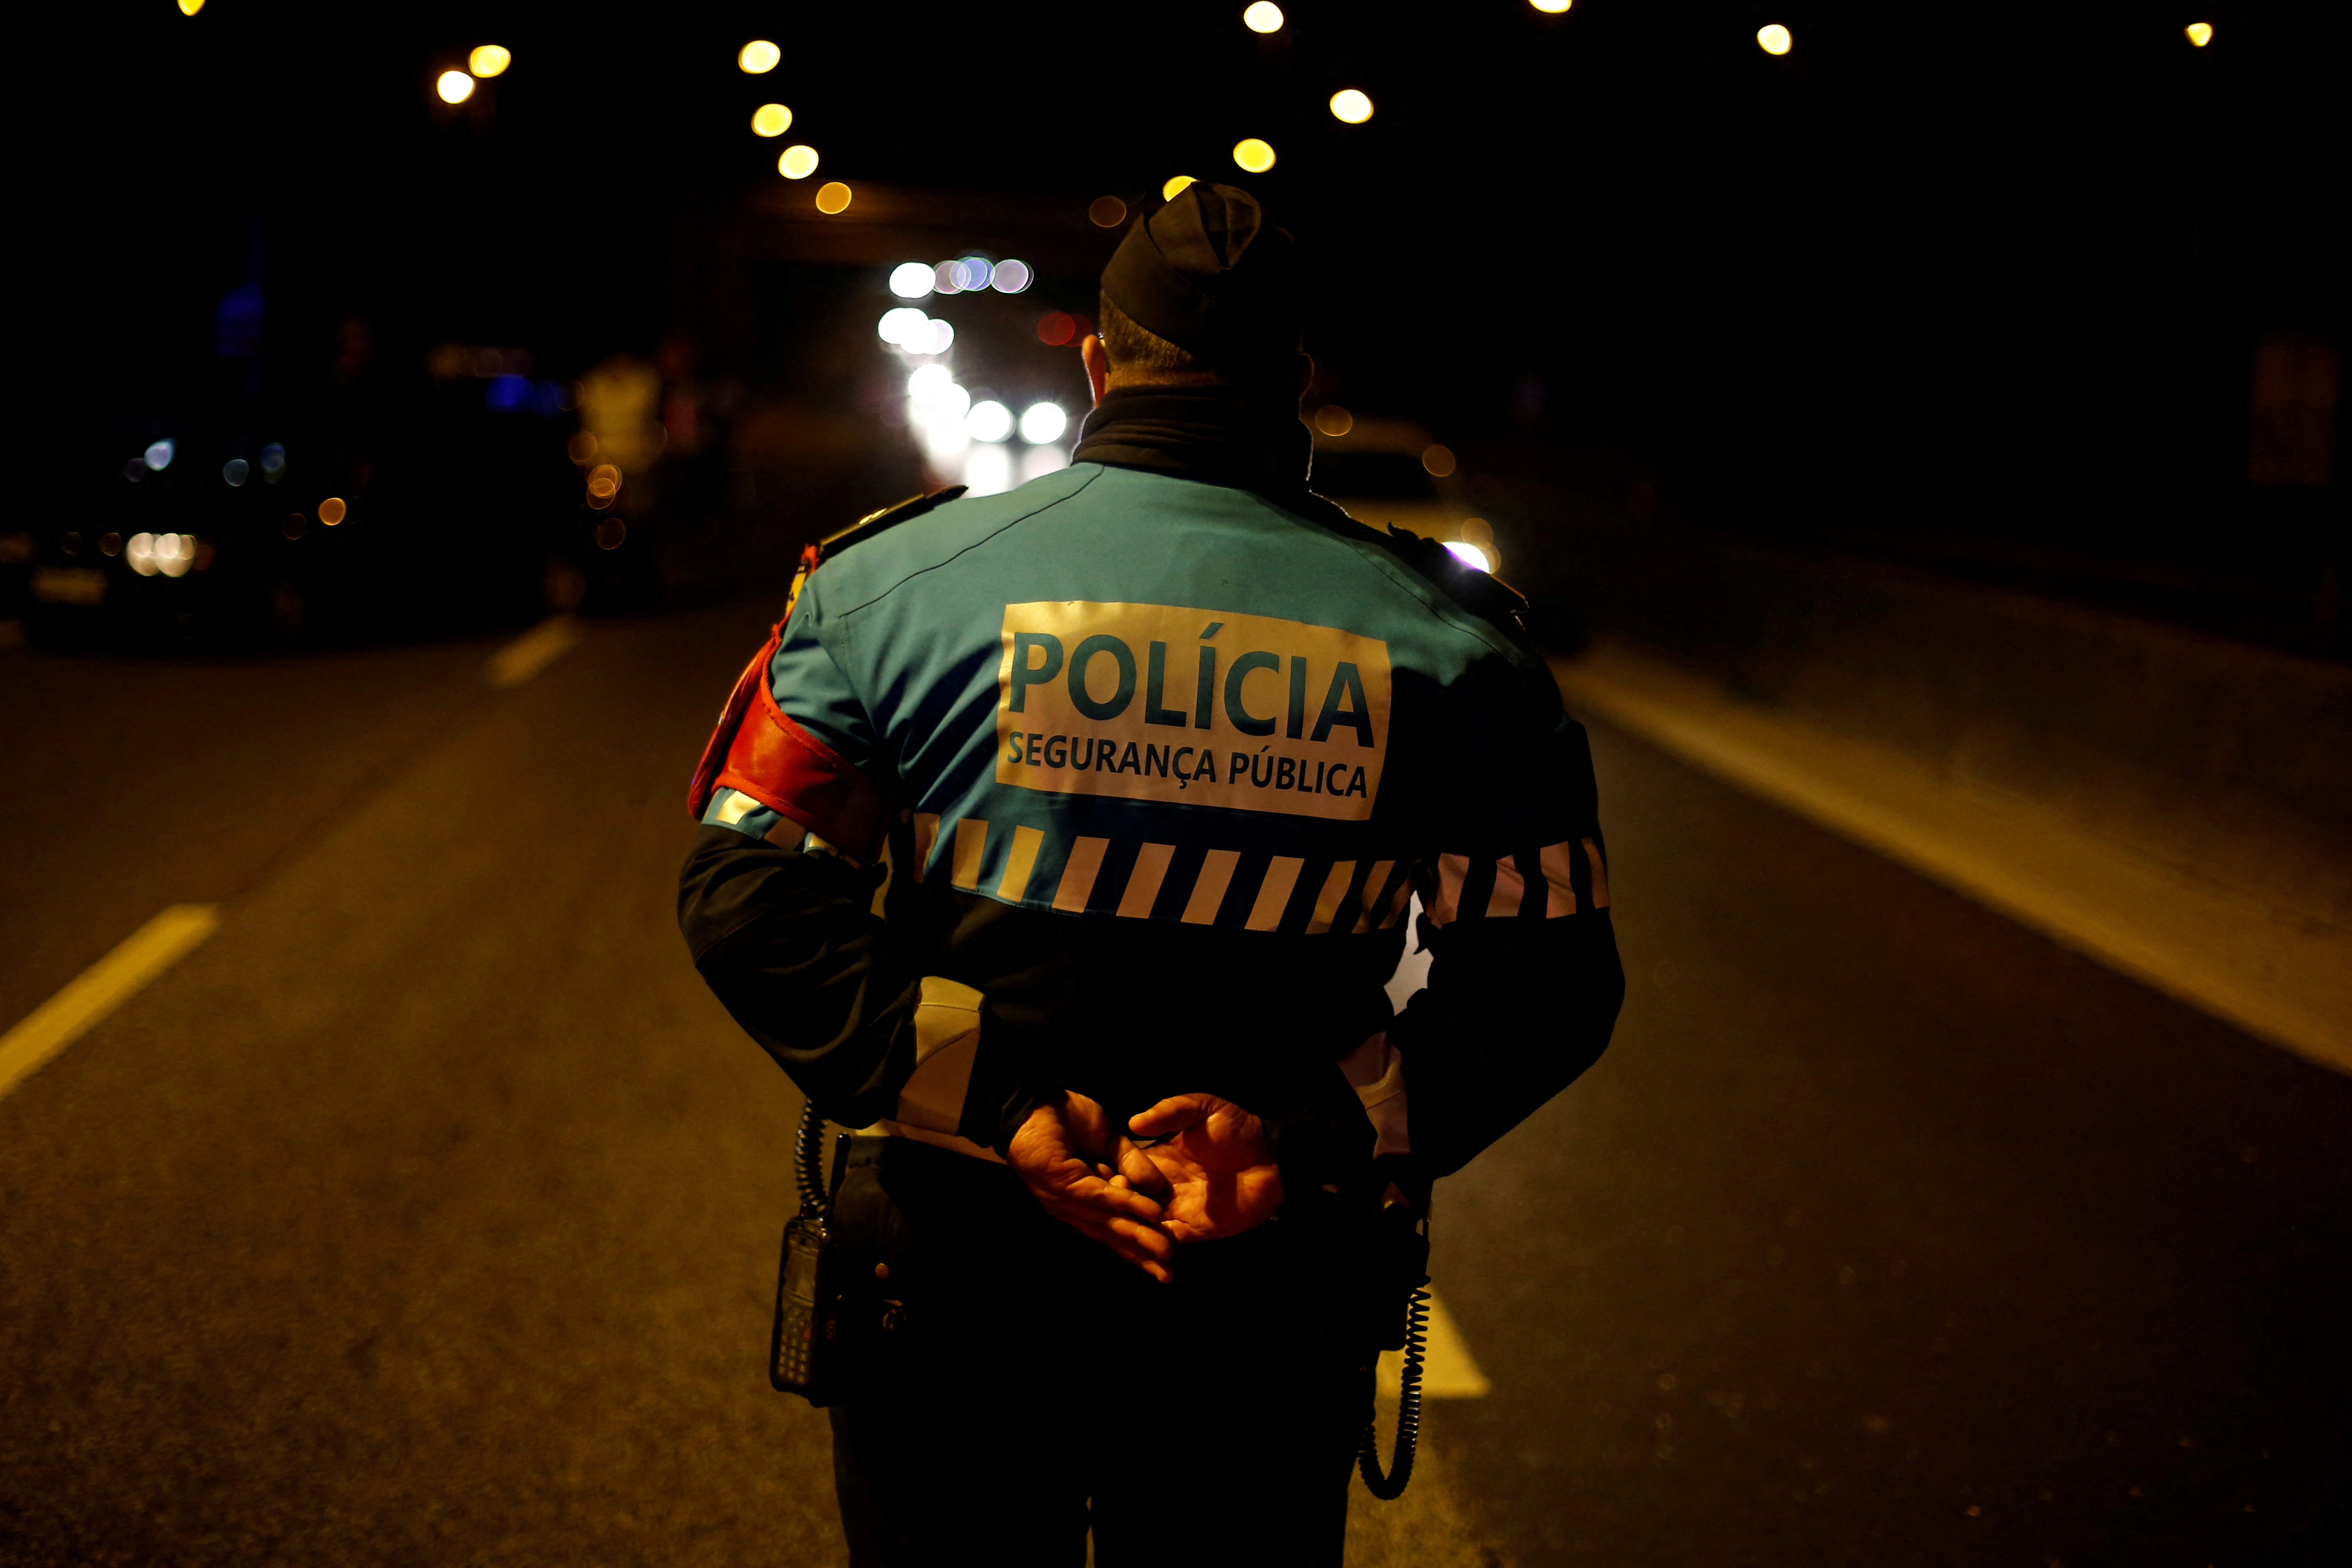 Policia de Segurança Publica (portuguese skin) 